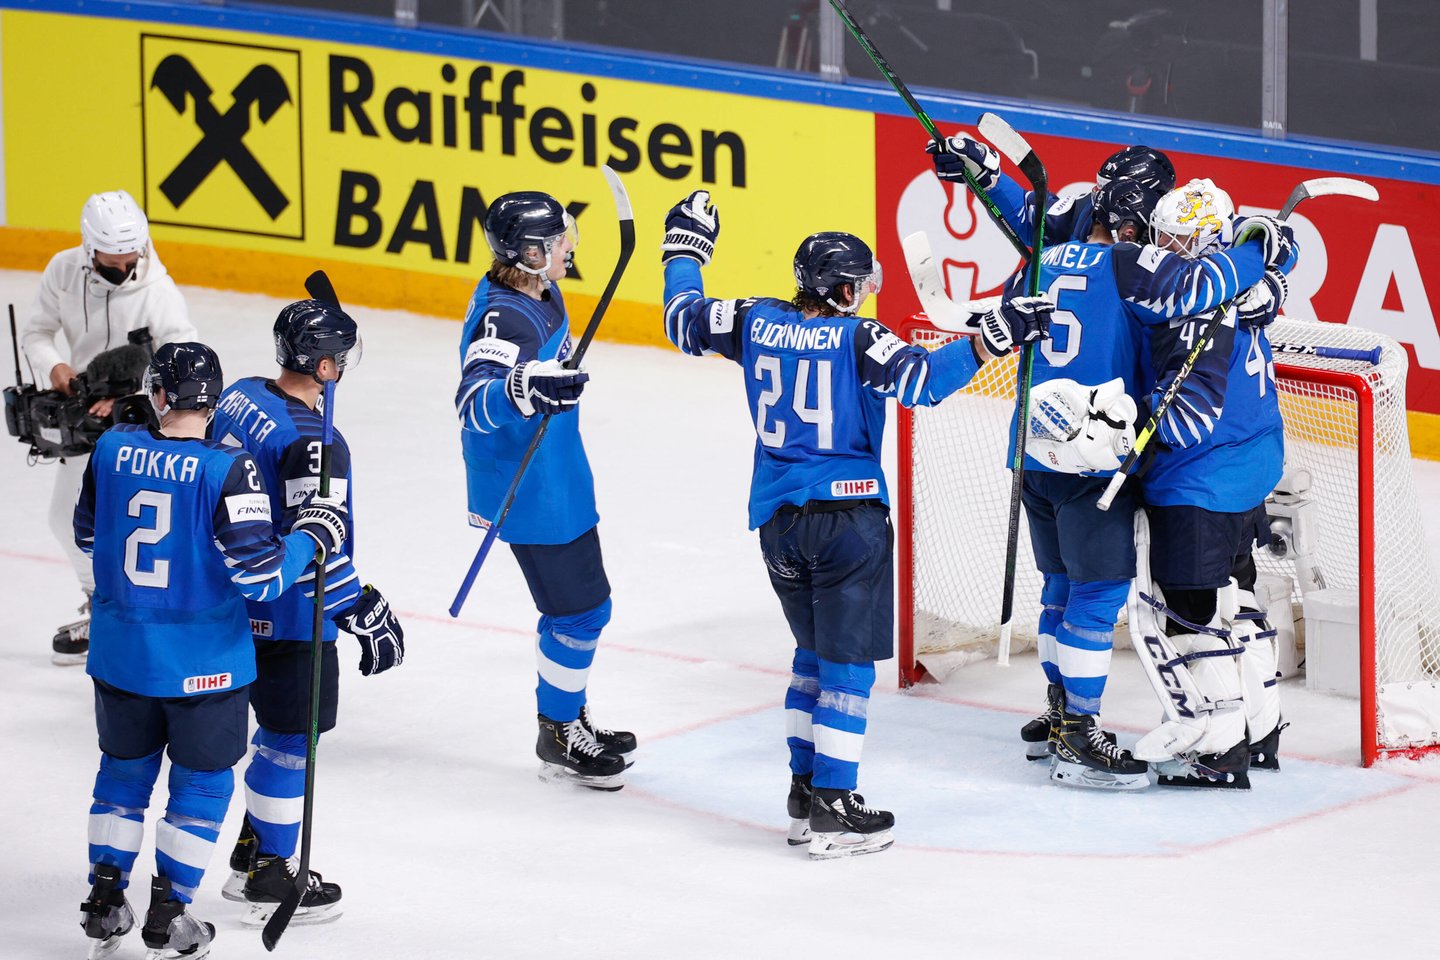 Suomija žengė į finalą.<br>imago images/Just Pictures/Scanpix nuotr.